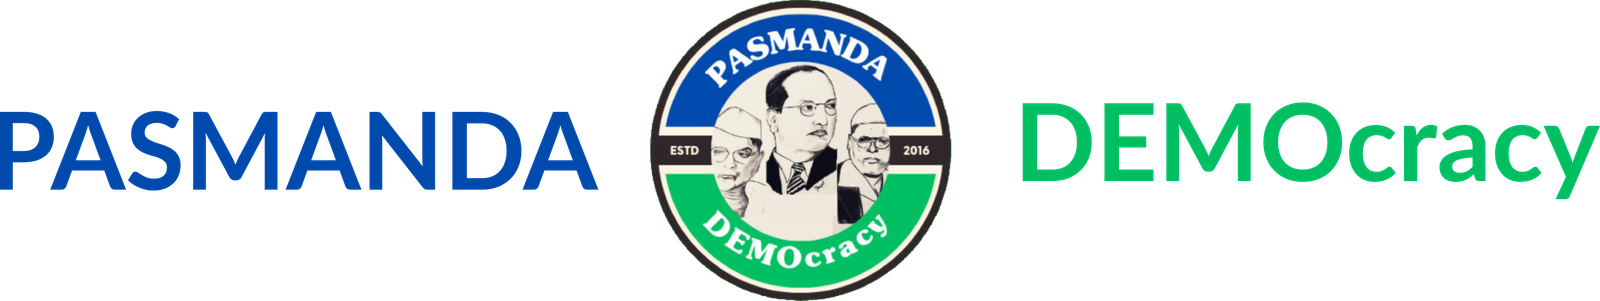 PASMANDA DEMOCRACY